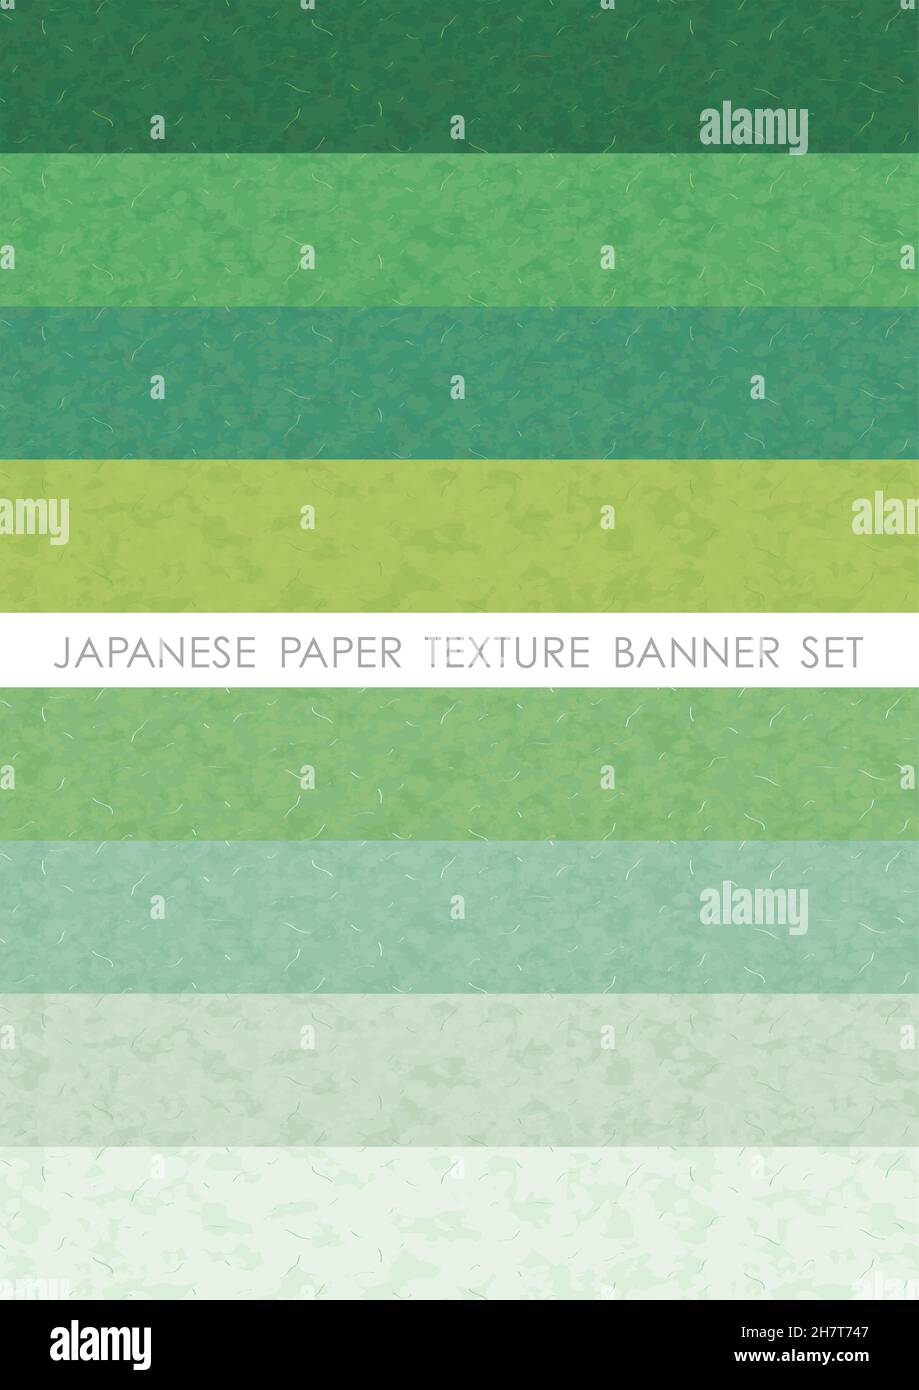 Navy Green Washi Tape Graphics Set Stock Illustration - Download